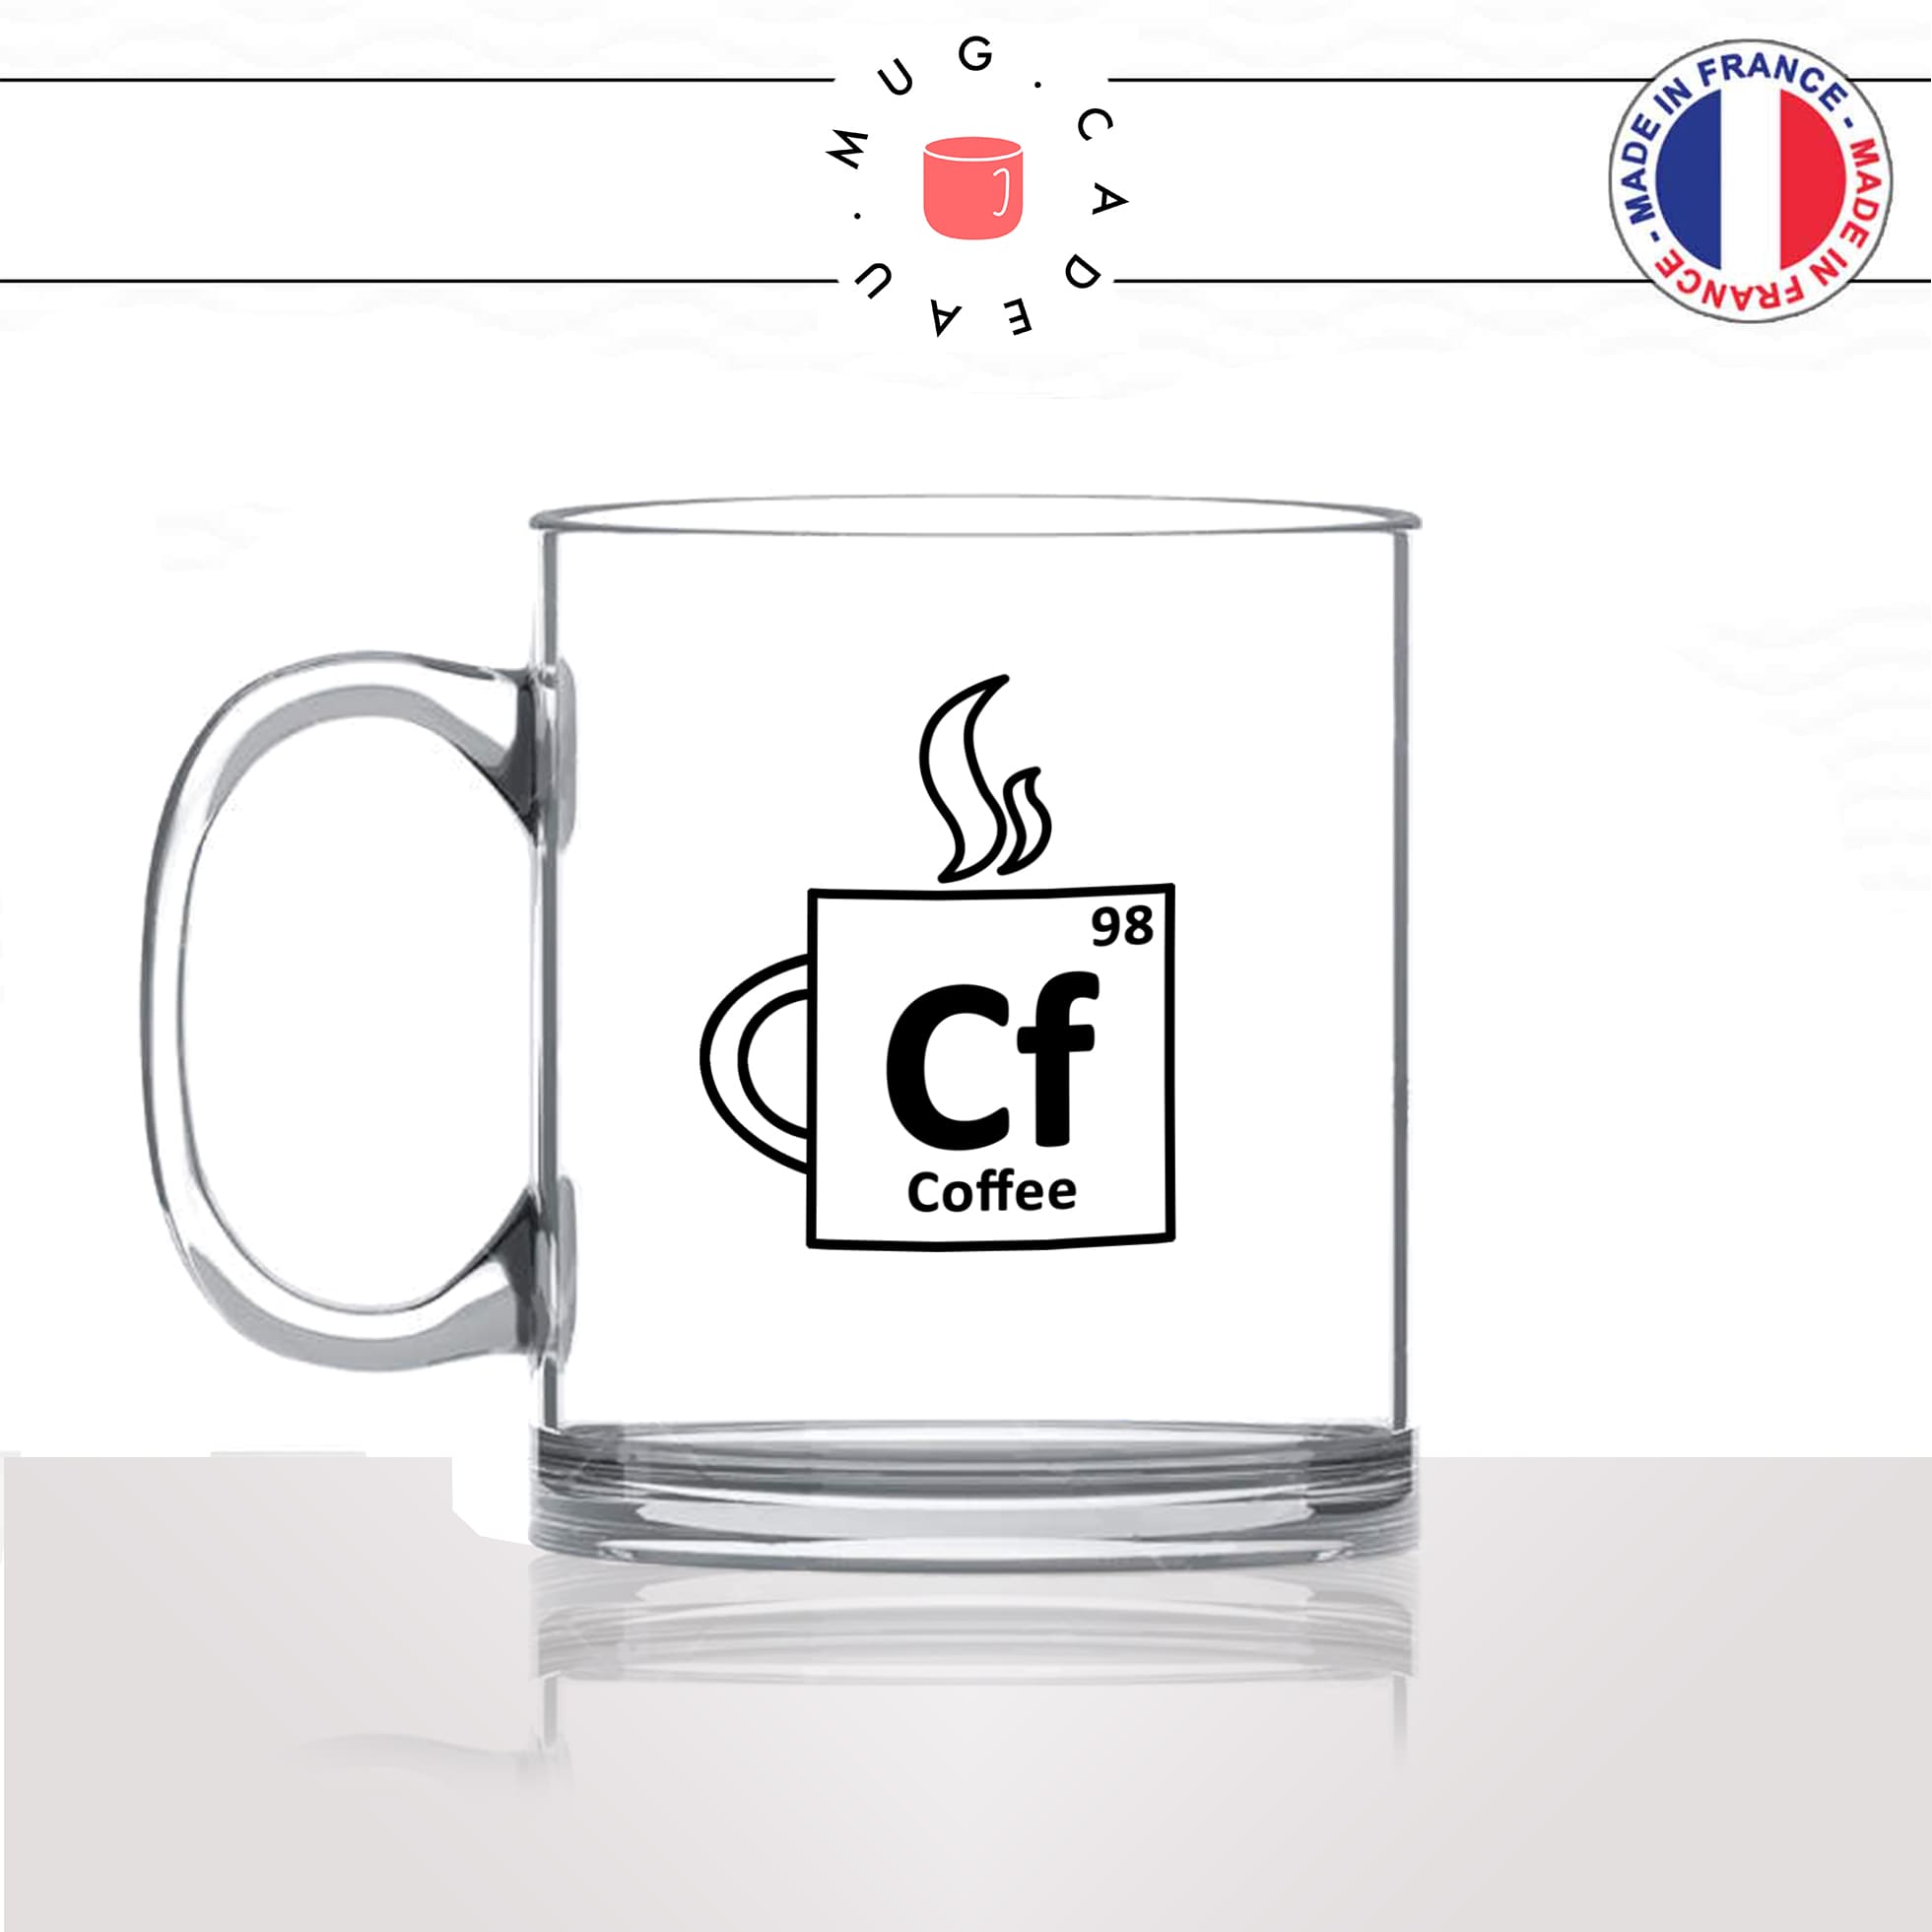 mug-tasse-en-verre-transparent-glass-geek-nerd-coffee-elementscience-periodique-collegue-recherche-matin-pause-idée-cadeau-fun-cool-café-thé